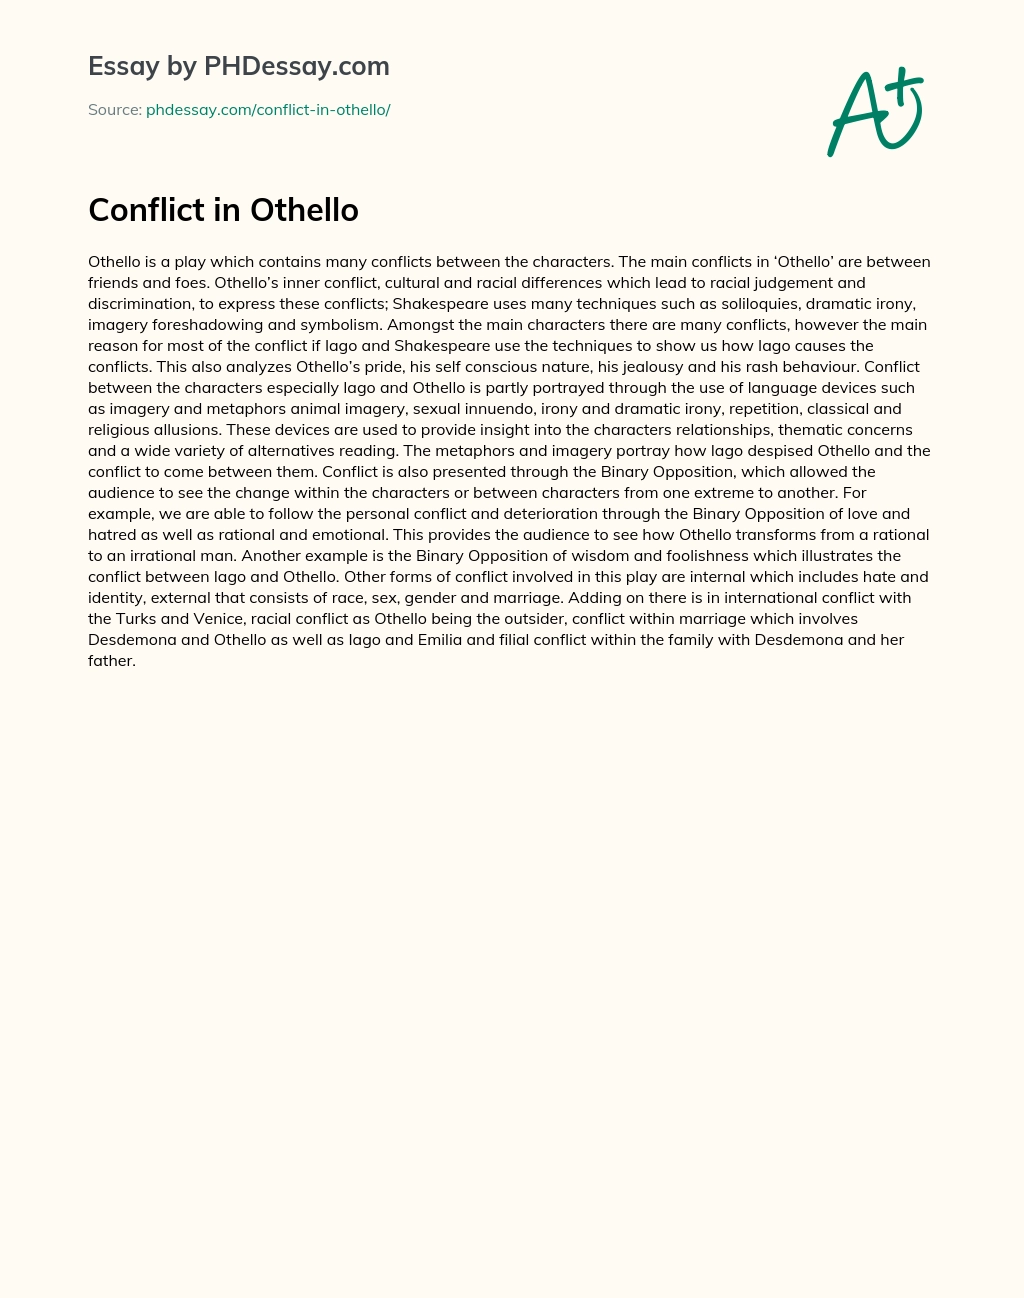 Conflict in Othello essay